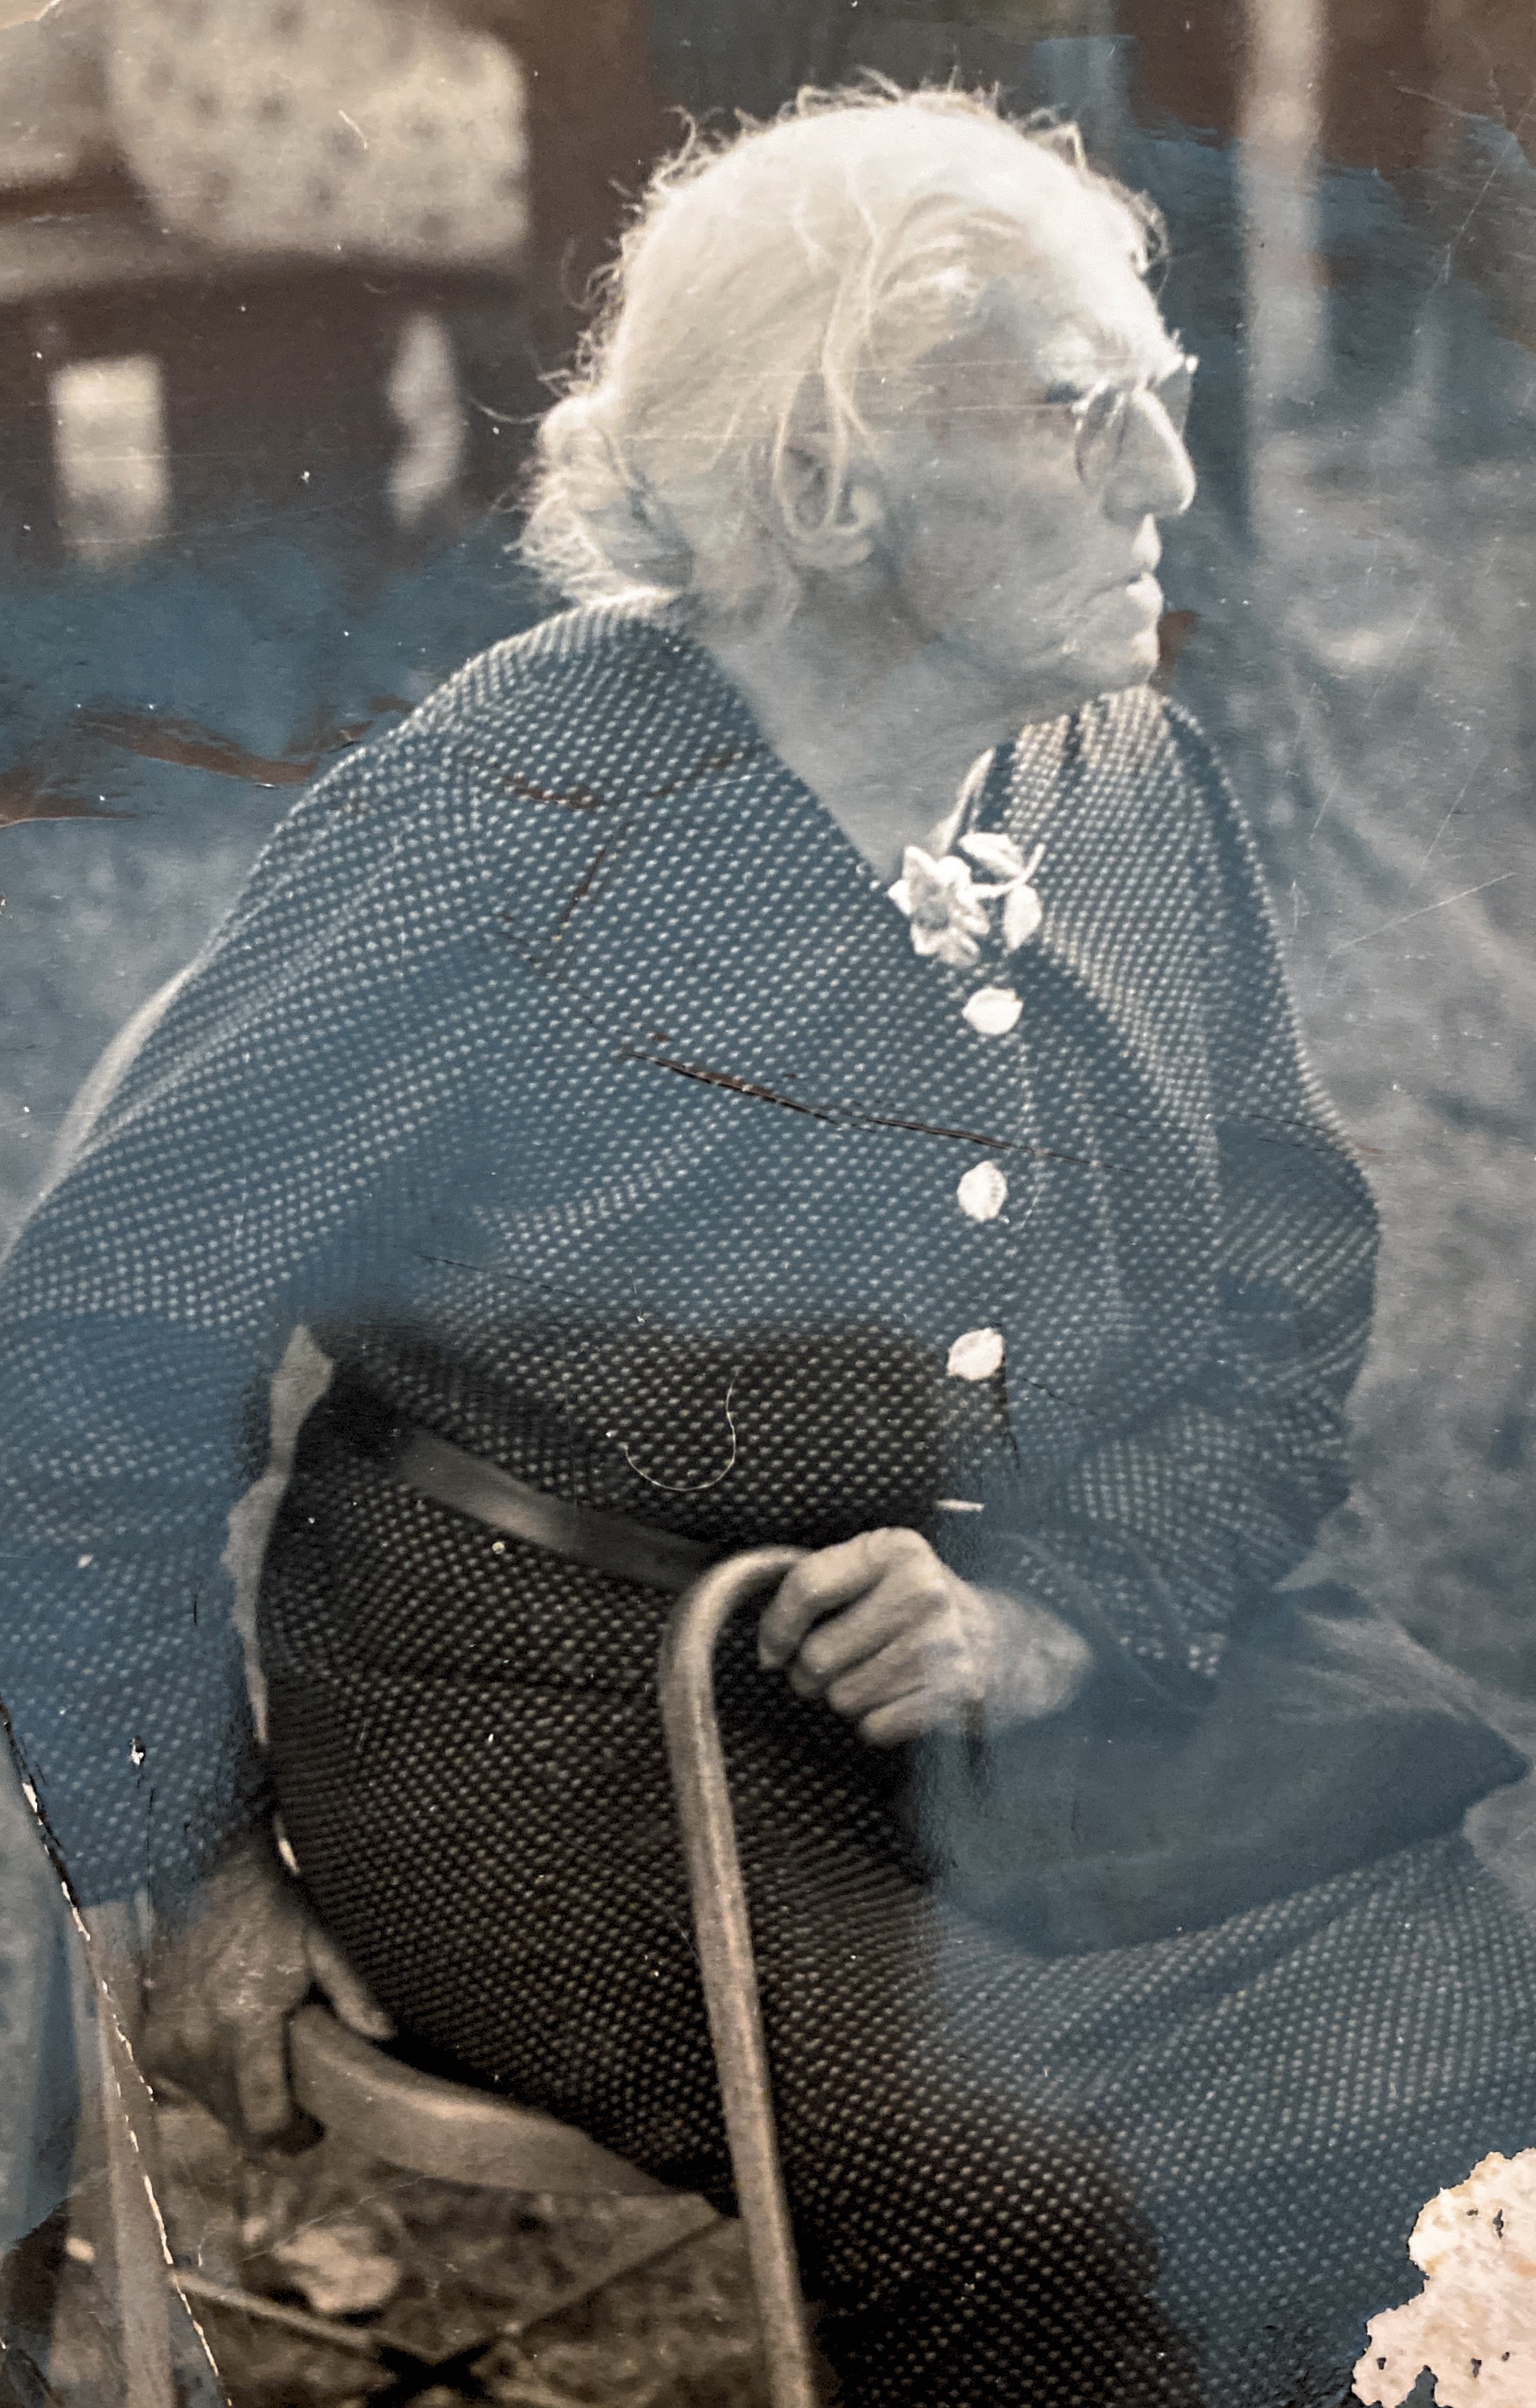 Grandma Belle Hartley Burgreen (1949) photo (A1)  thandma hellHorthykurgreen